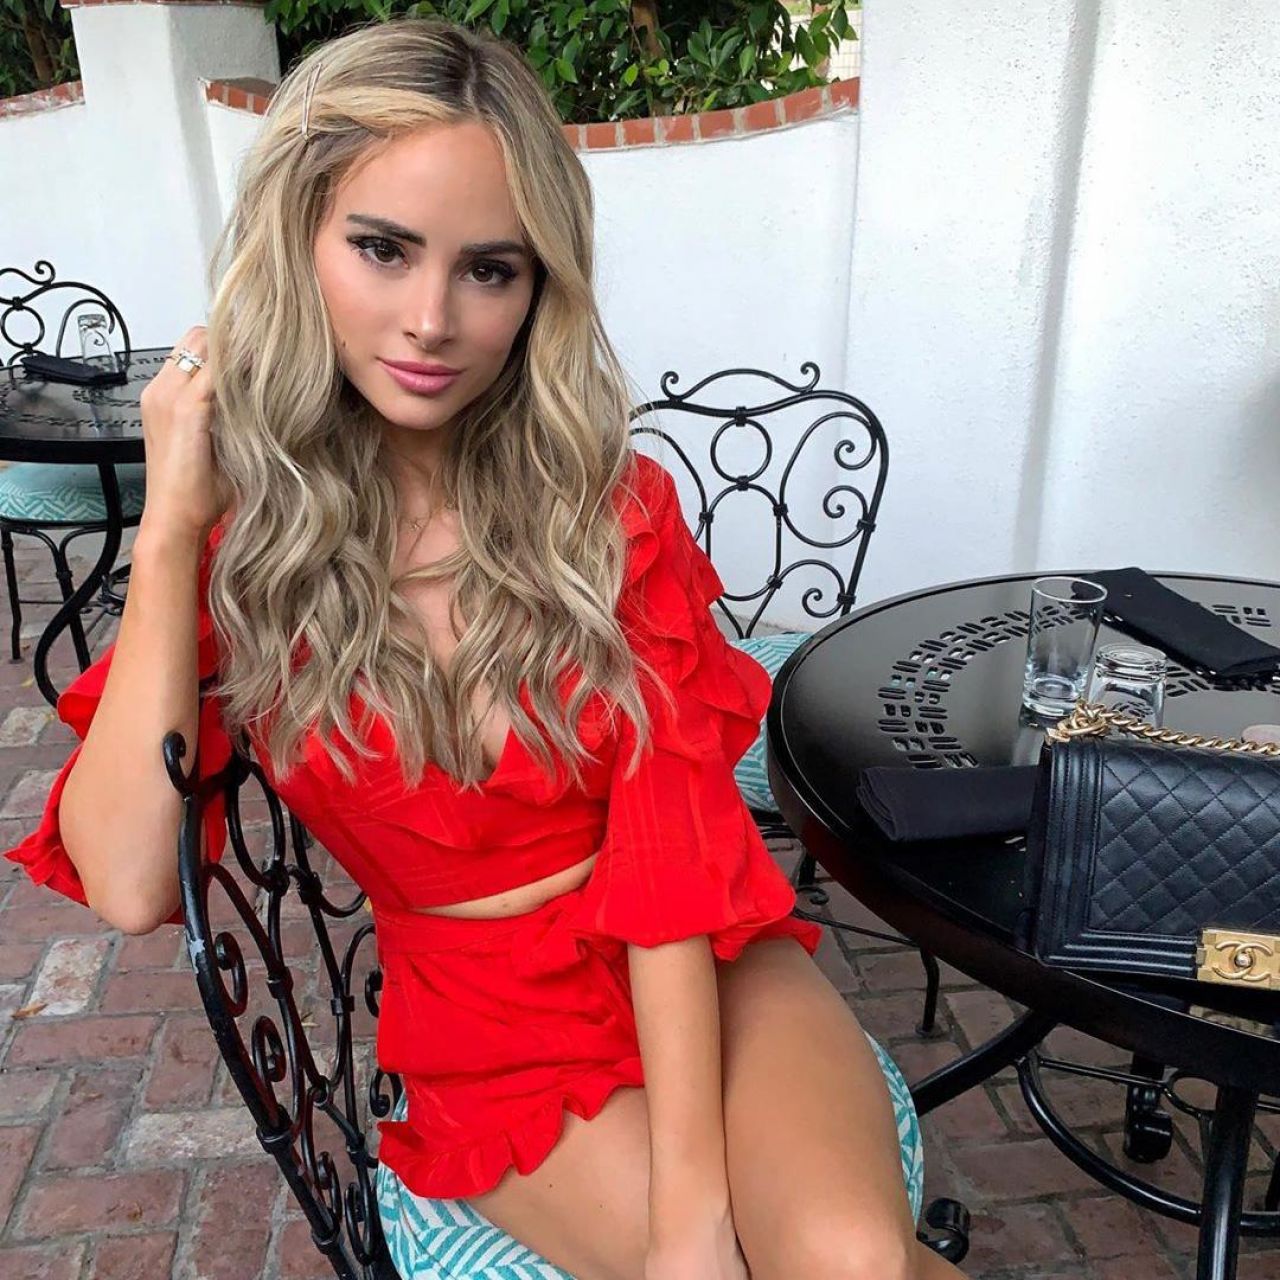 Majorelle Enzo Romper in Red worn by Amanda Stanton on her Instagram accoun...